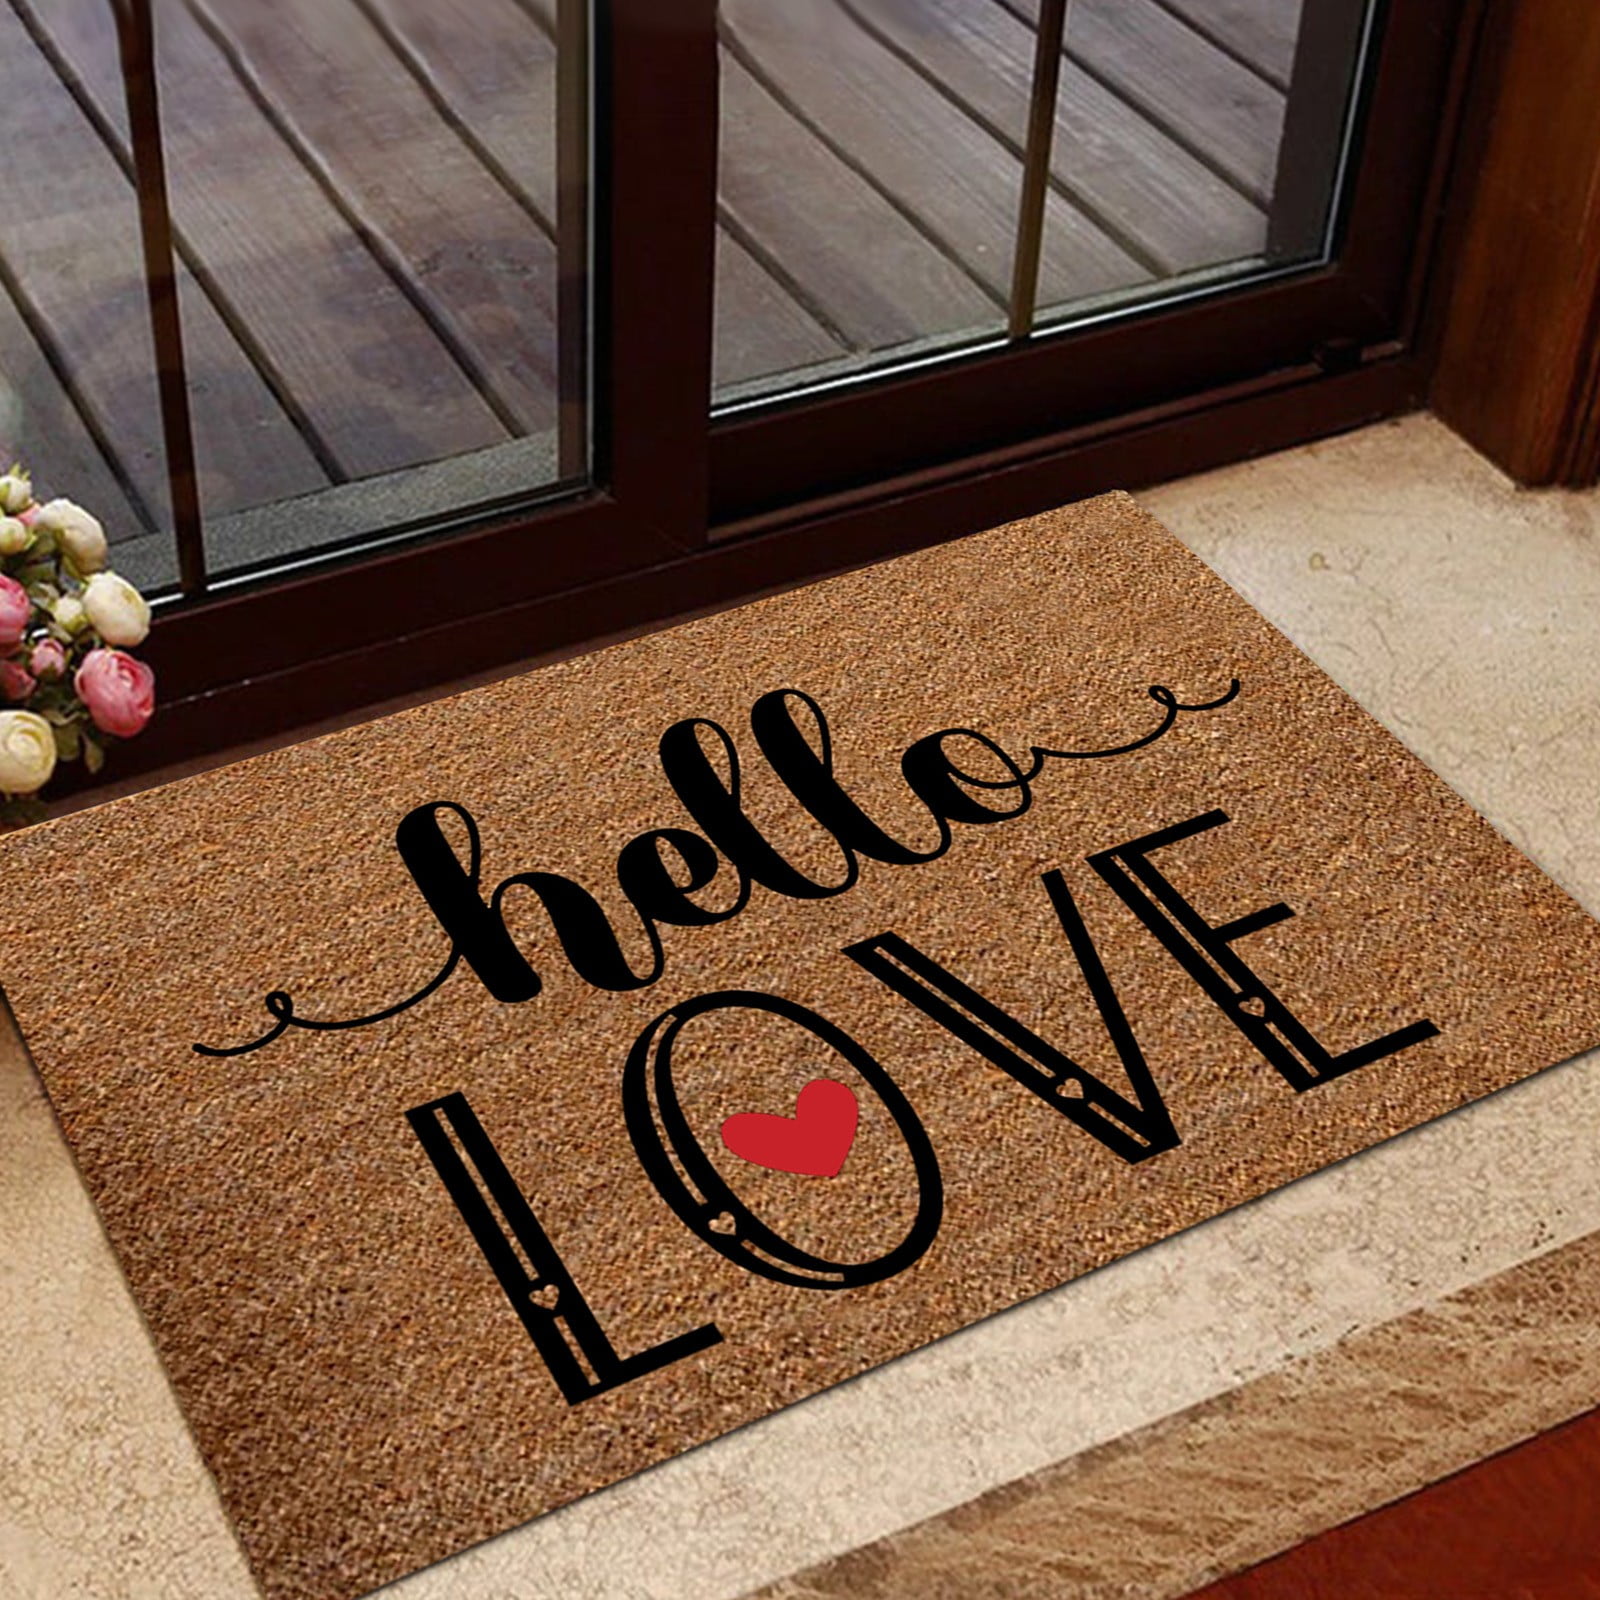 Valentines Day Holiday Doormat| Choir Doormat HELLO VALENTINE DOORMAT Custom Doormat Front Porch Decor Hand Painted Love